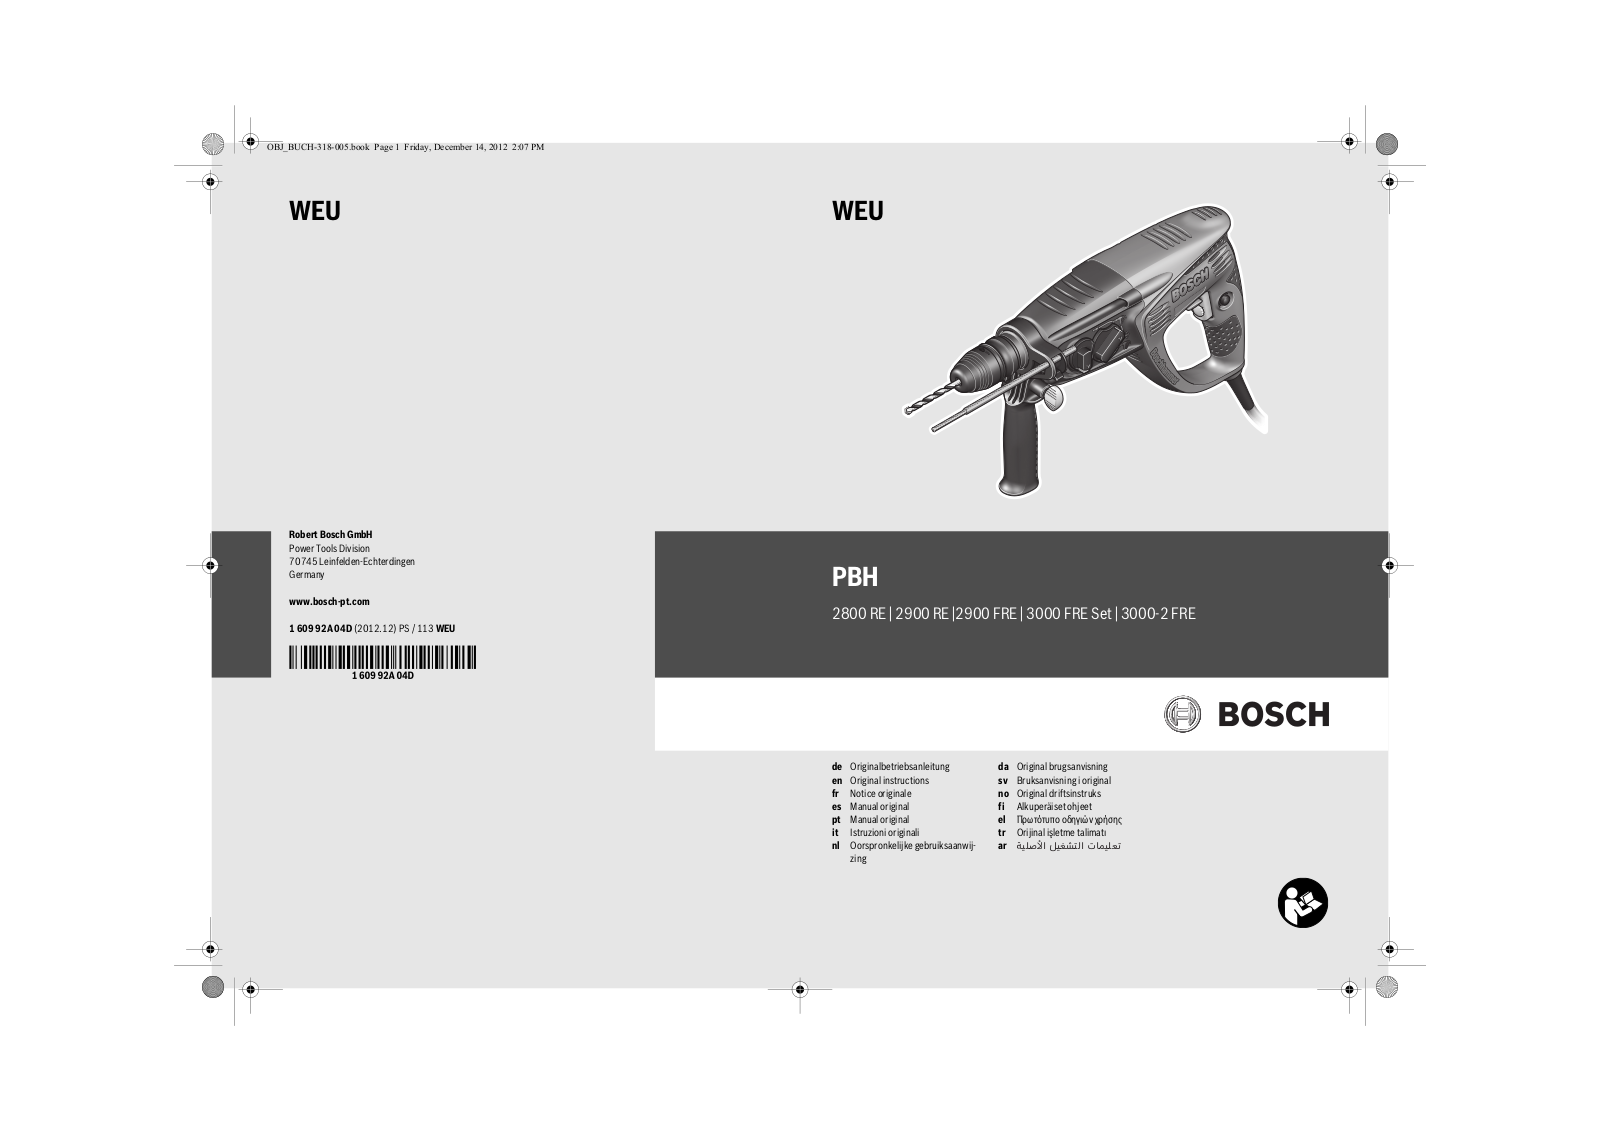 Bosch PBH 2900 RE Professional User Manual